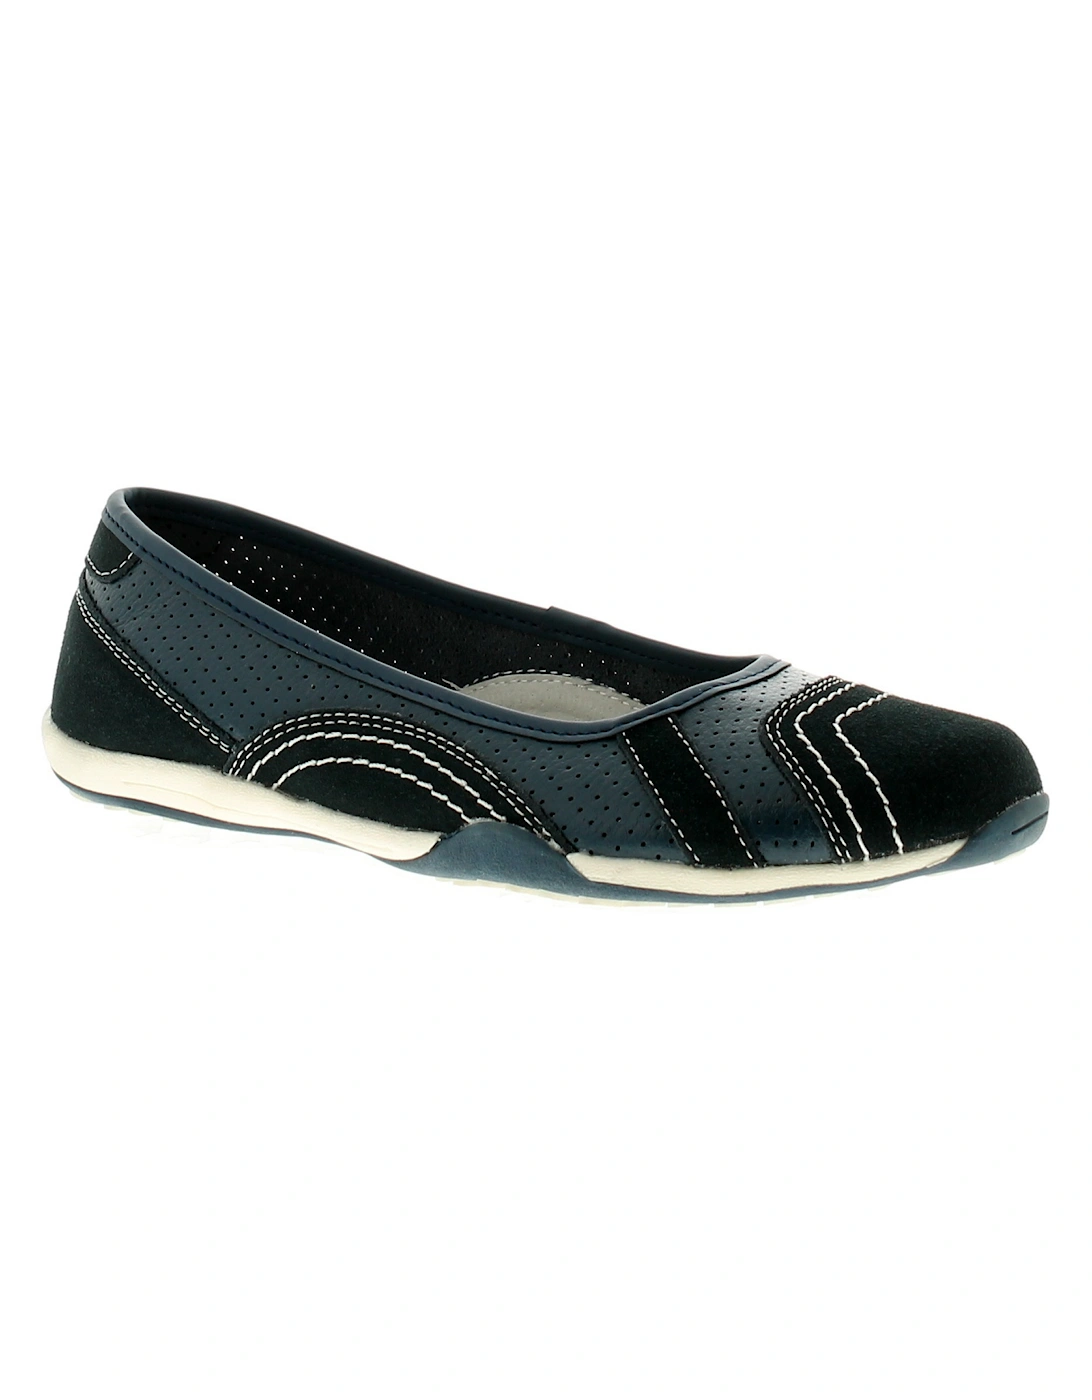 Womens Flat Shoes jackie leather Slip On navy UK Size, 6 of 5